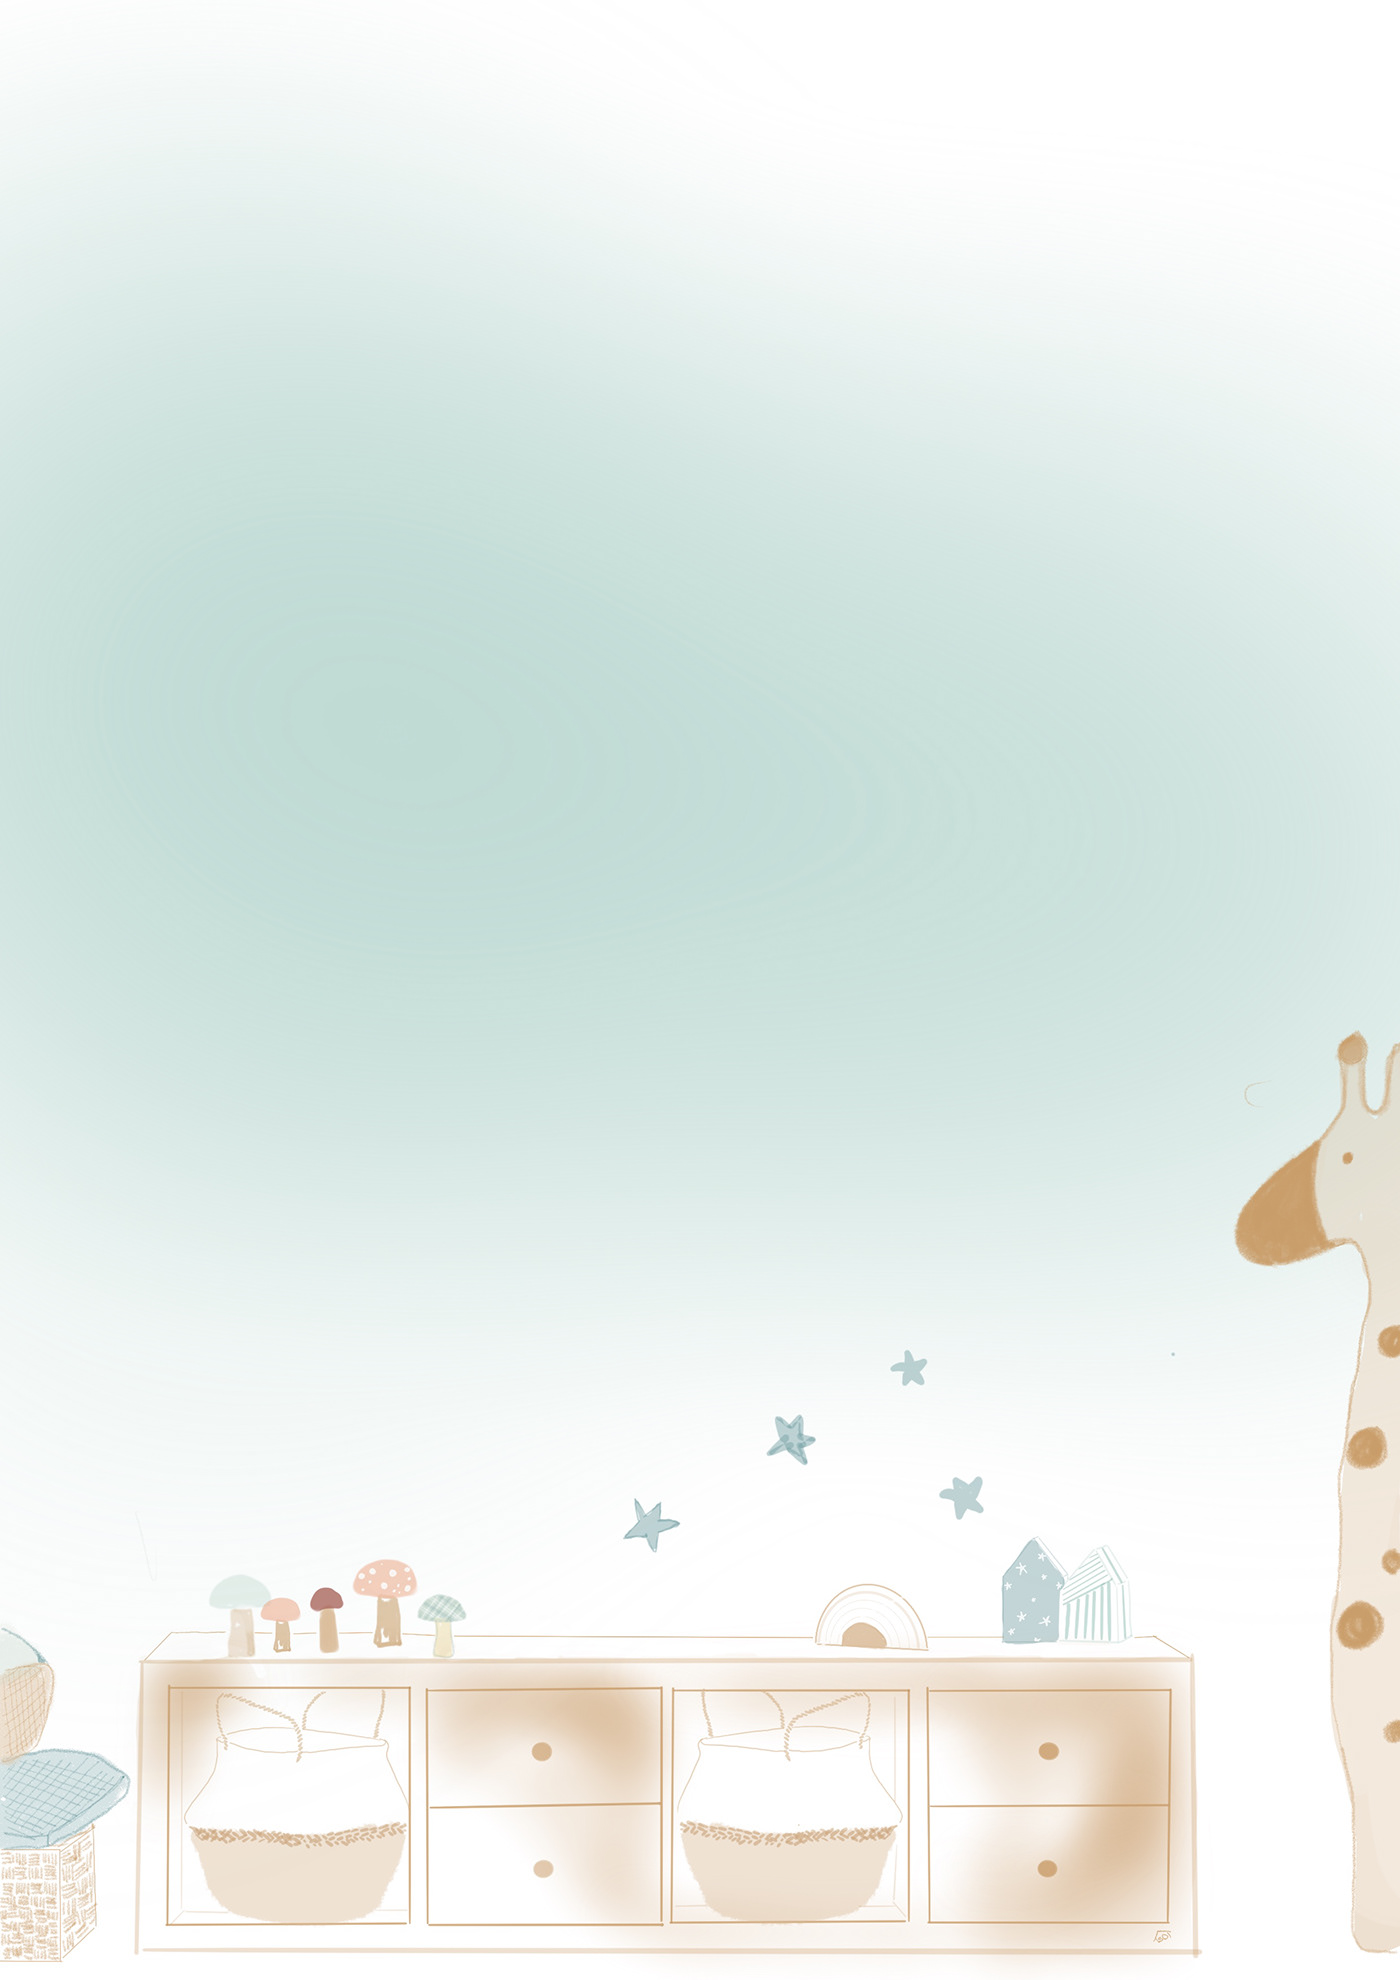 bimbi kids compleanno quadro auguri Cameretta funghi giraffa stelle tenerezza